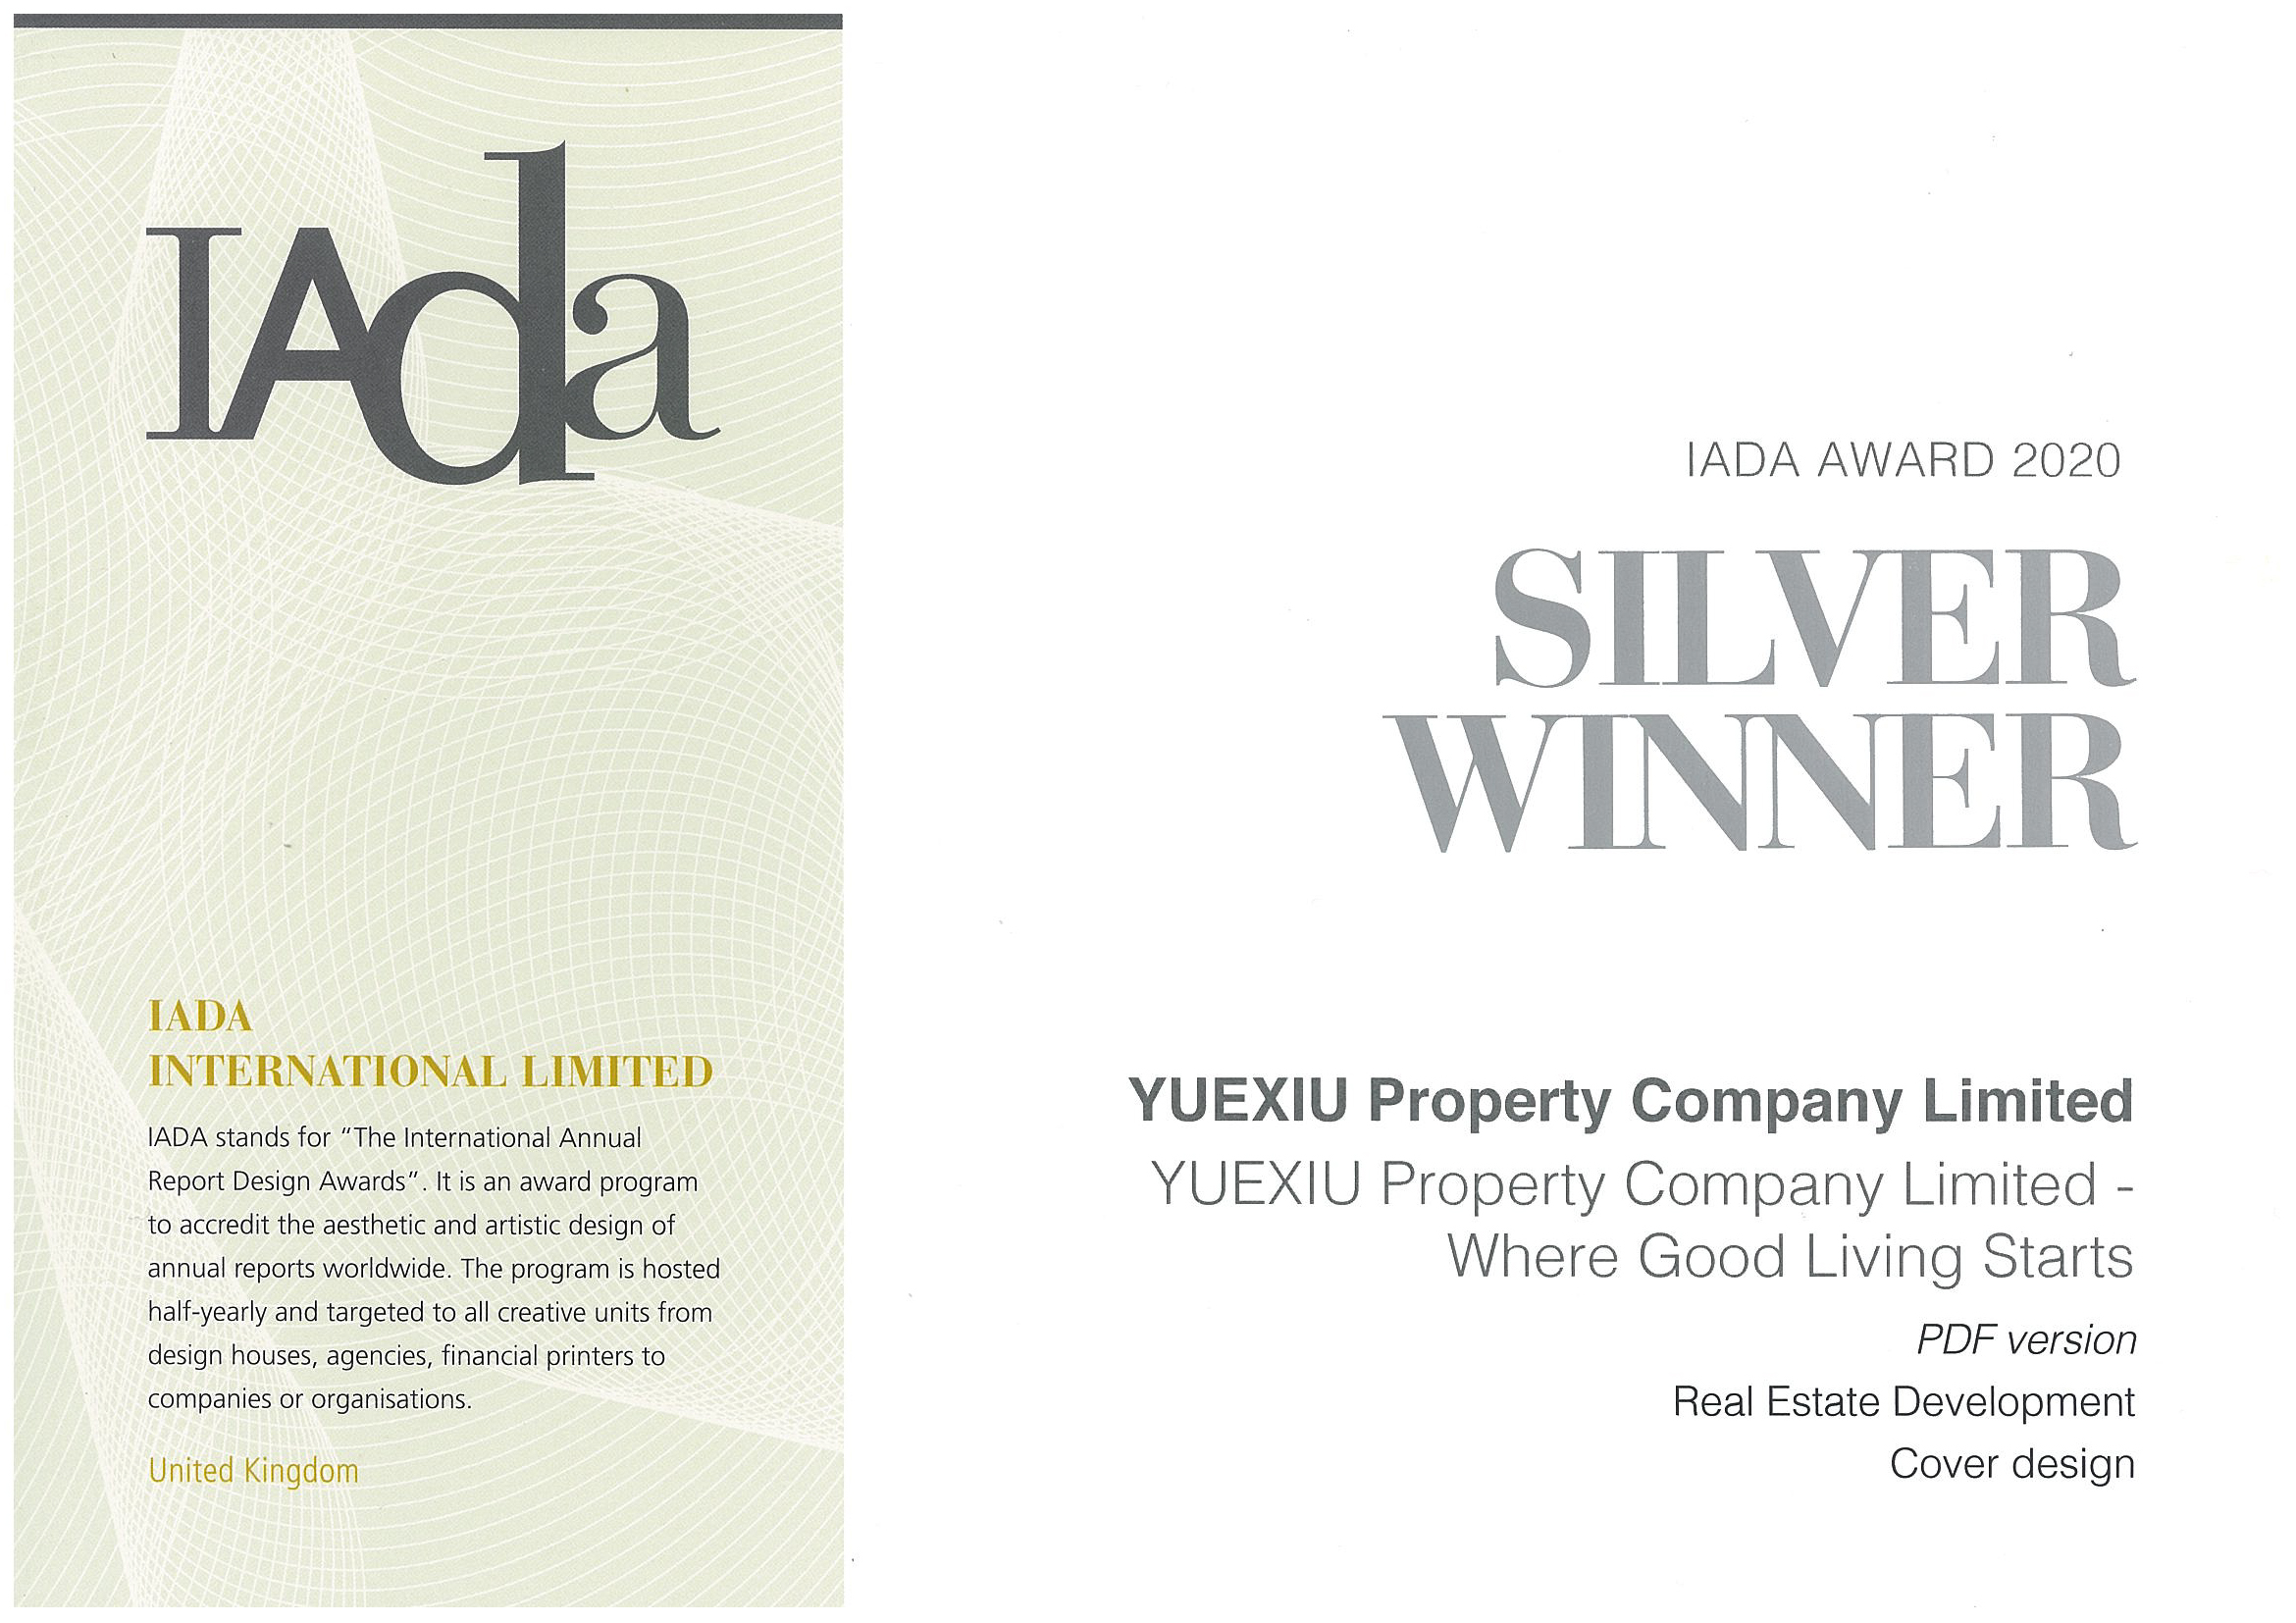 YUEXIU PROPERTY COMPANY LIMITED – IADA AWARD 2020 SILVER WINNER